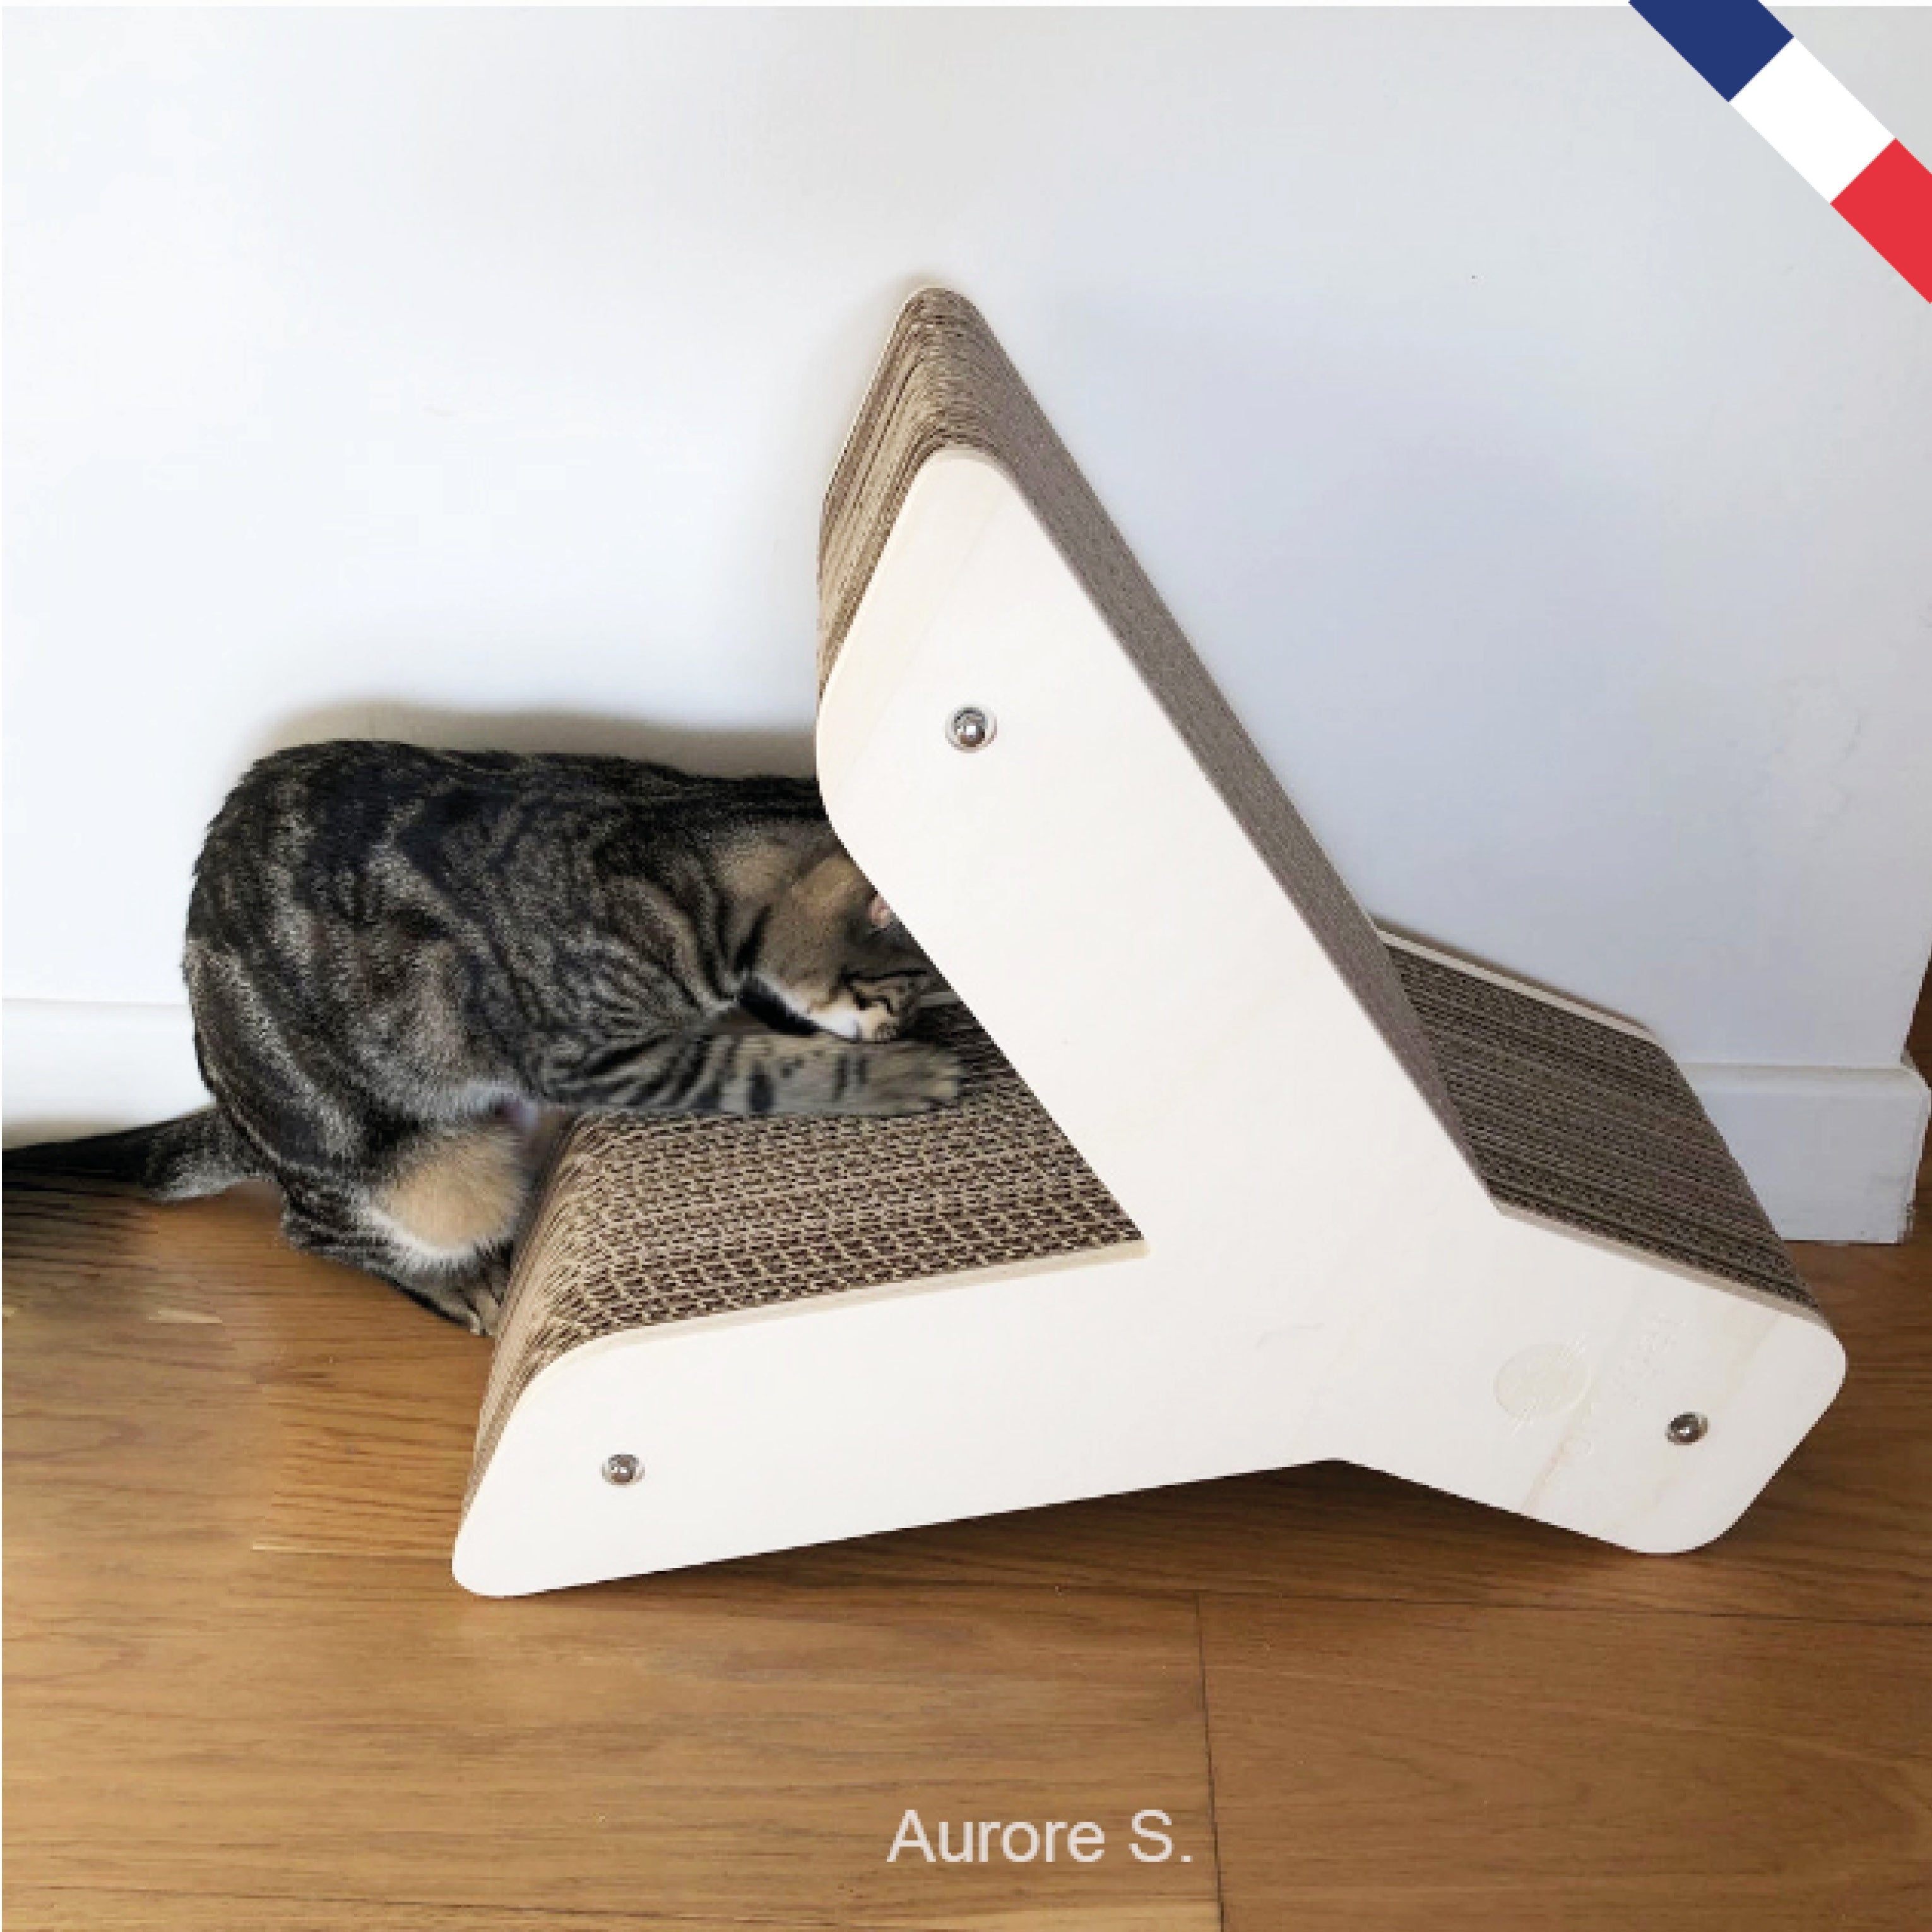 Jouet Oiseau pour chat avec herbe à chat Made In France - Homycat